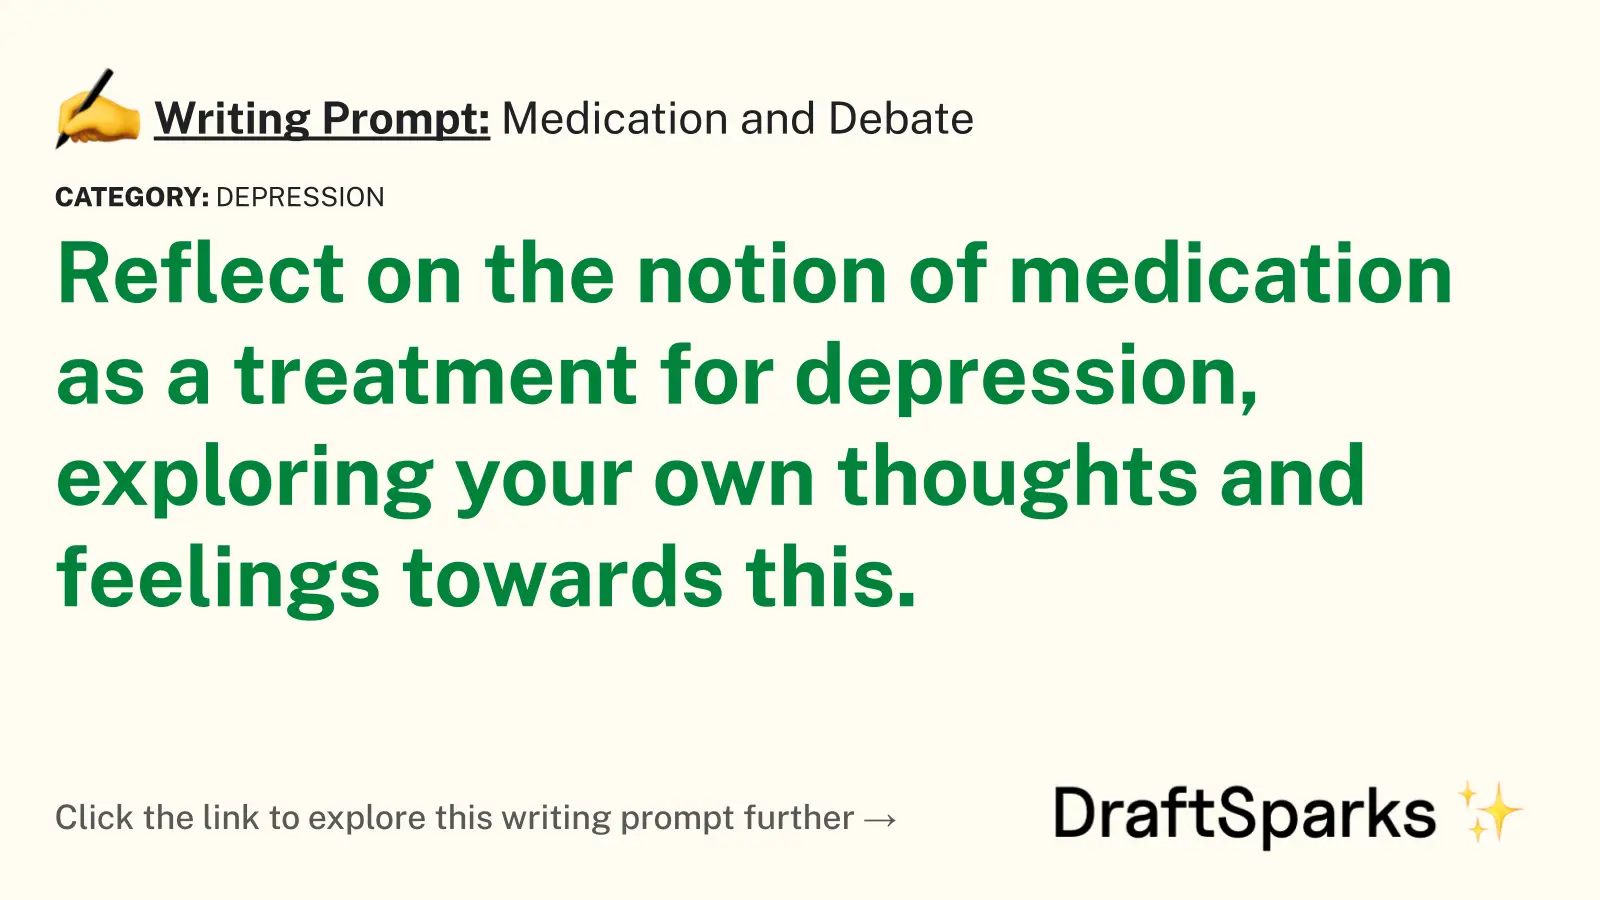 Medication and Debate